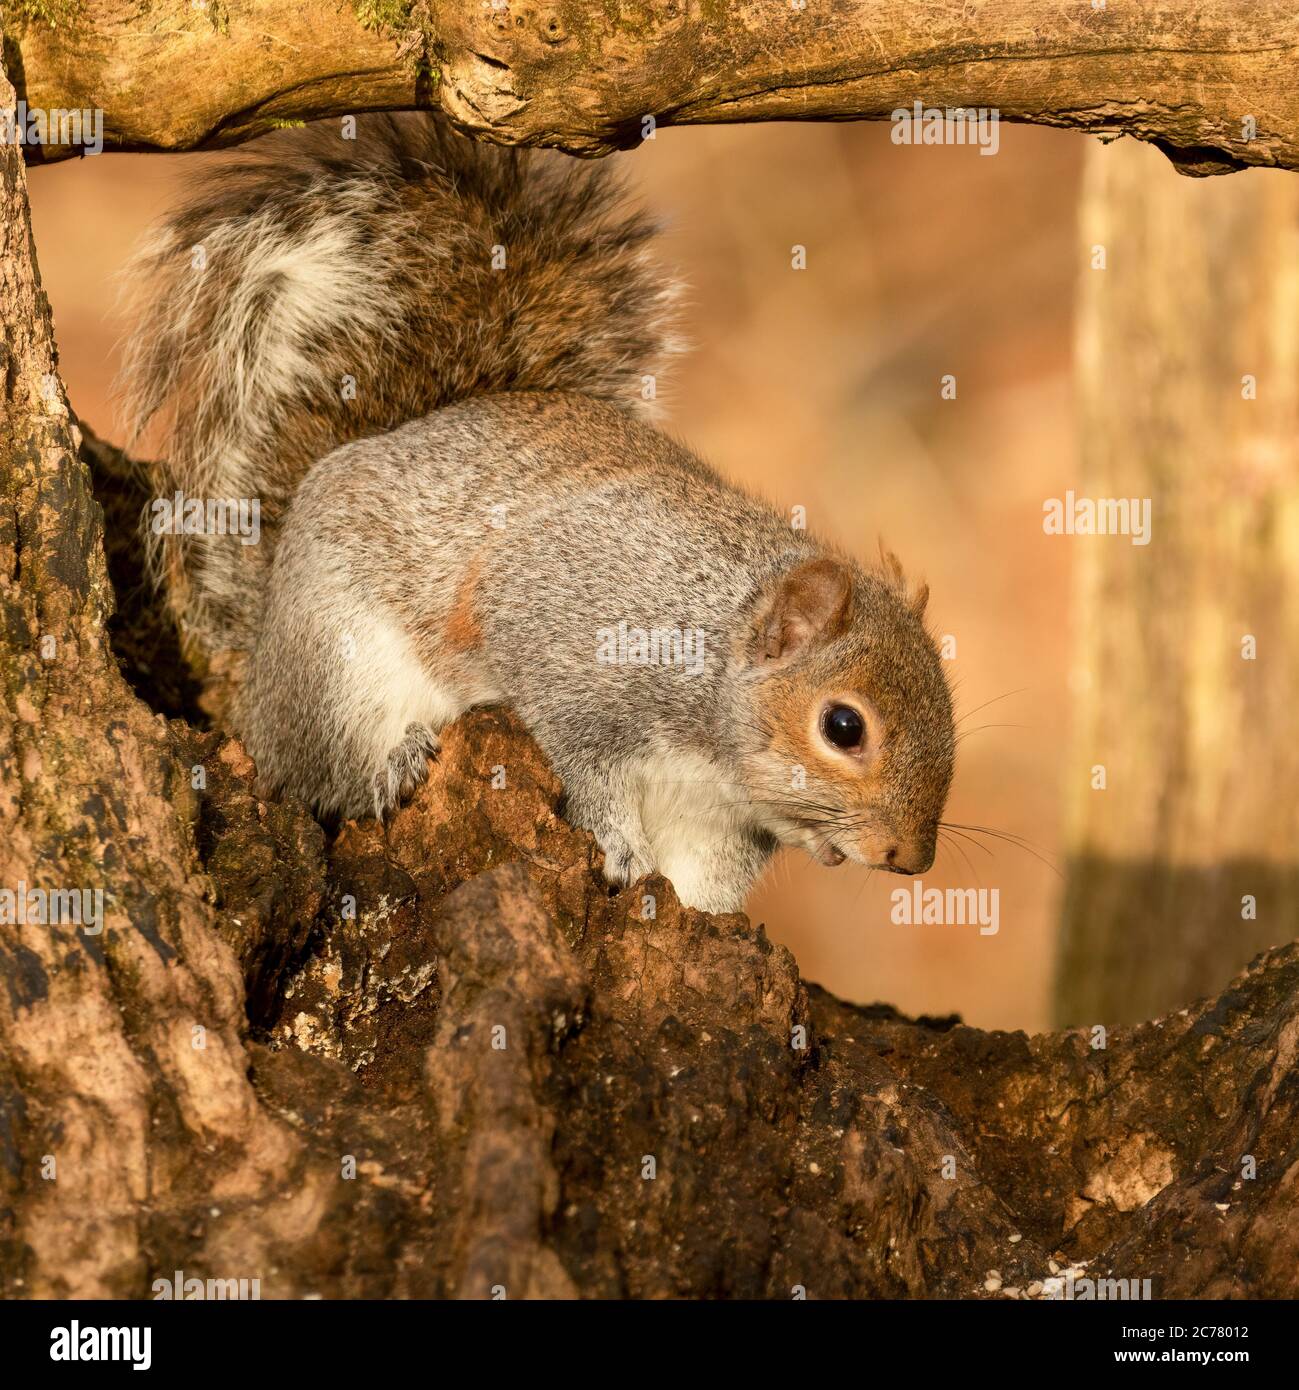 Grey squirrel, Sciurus carolinensis, sitting on tree stump with blurred autumn background Stock Photo